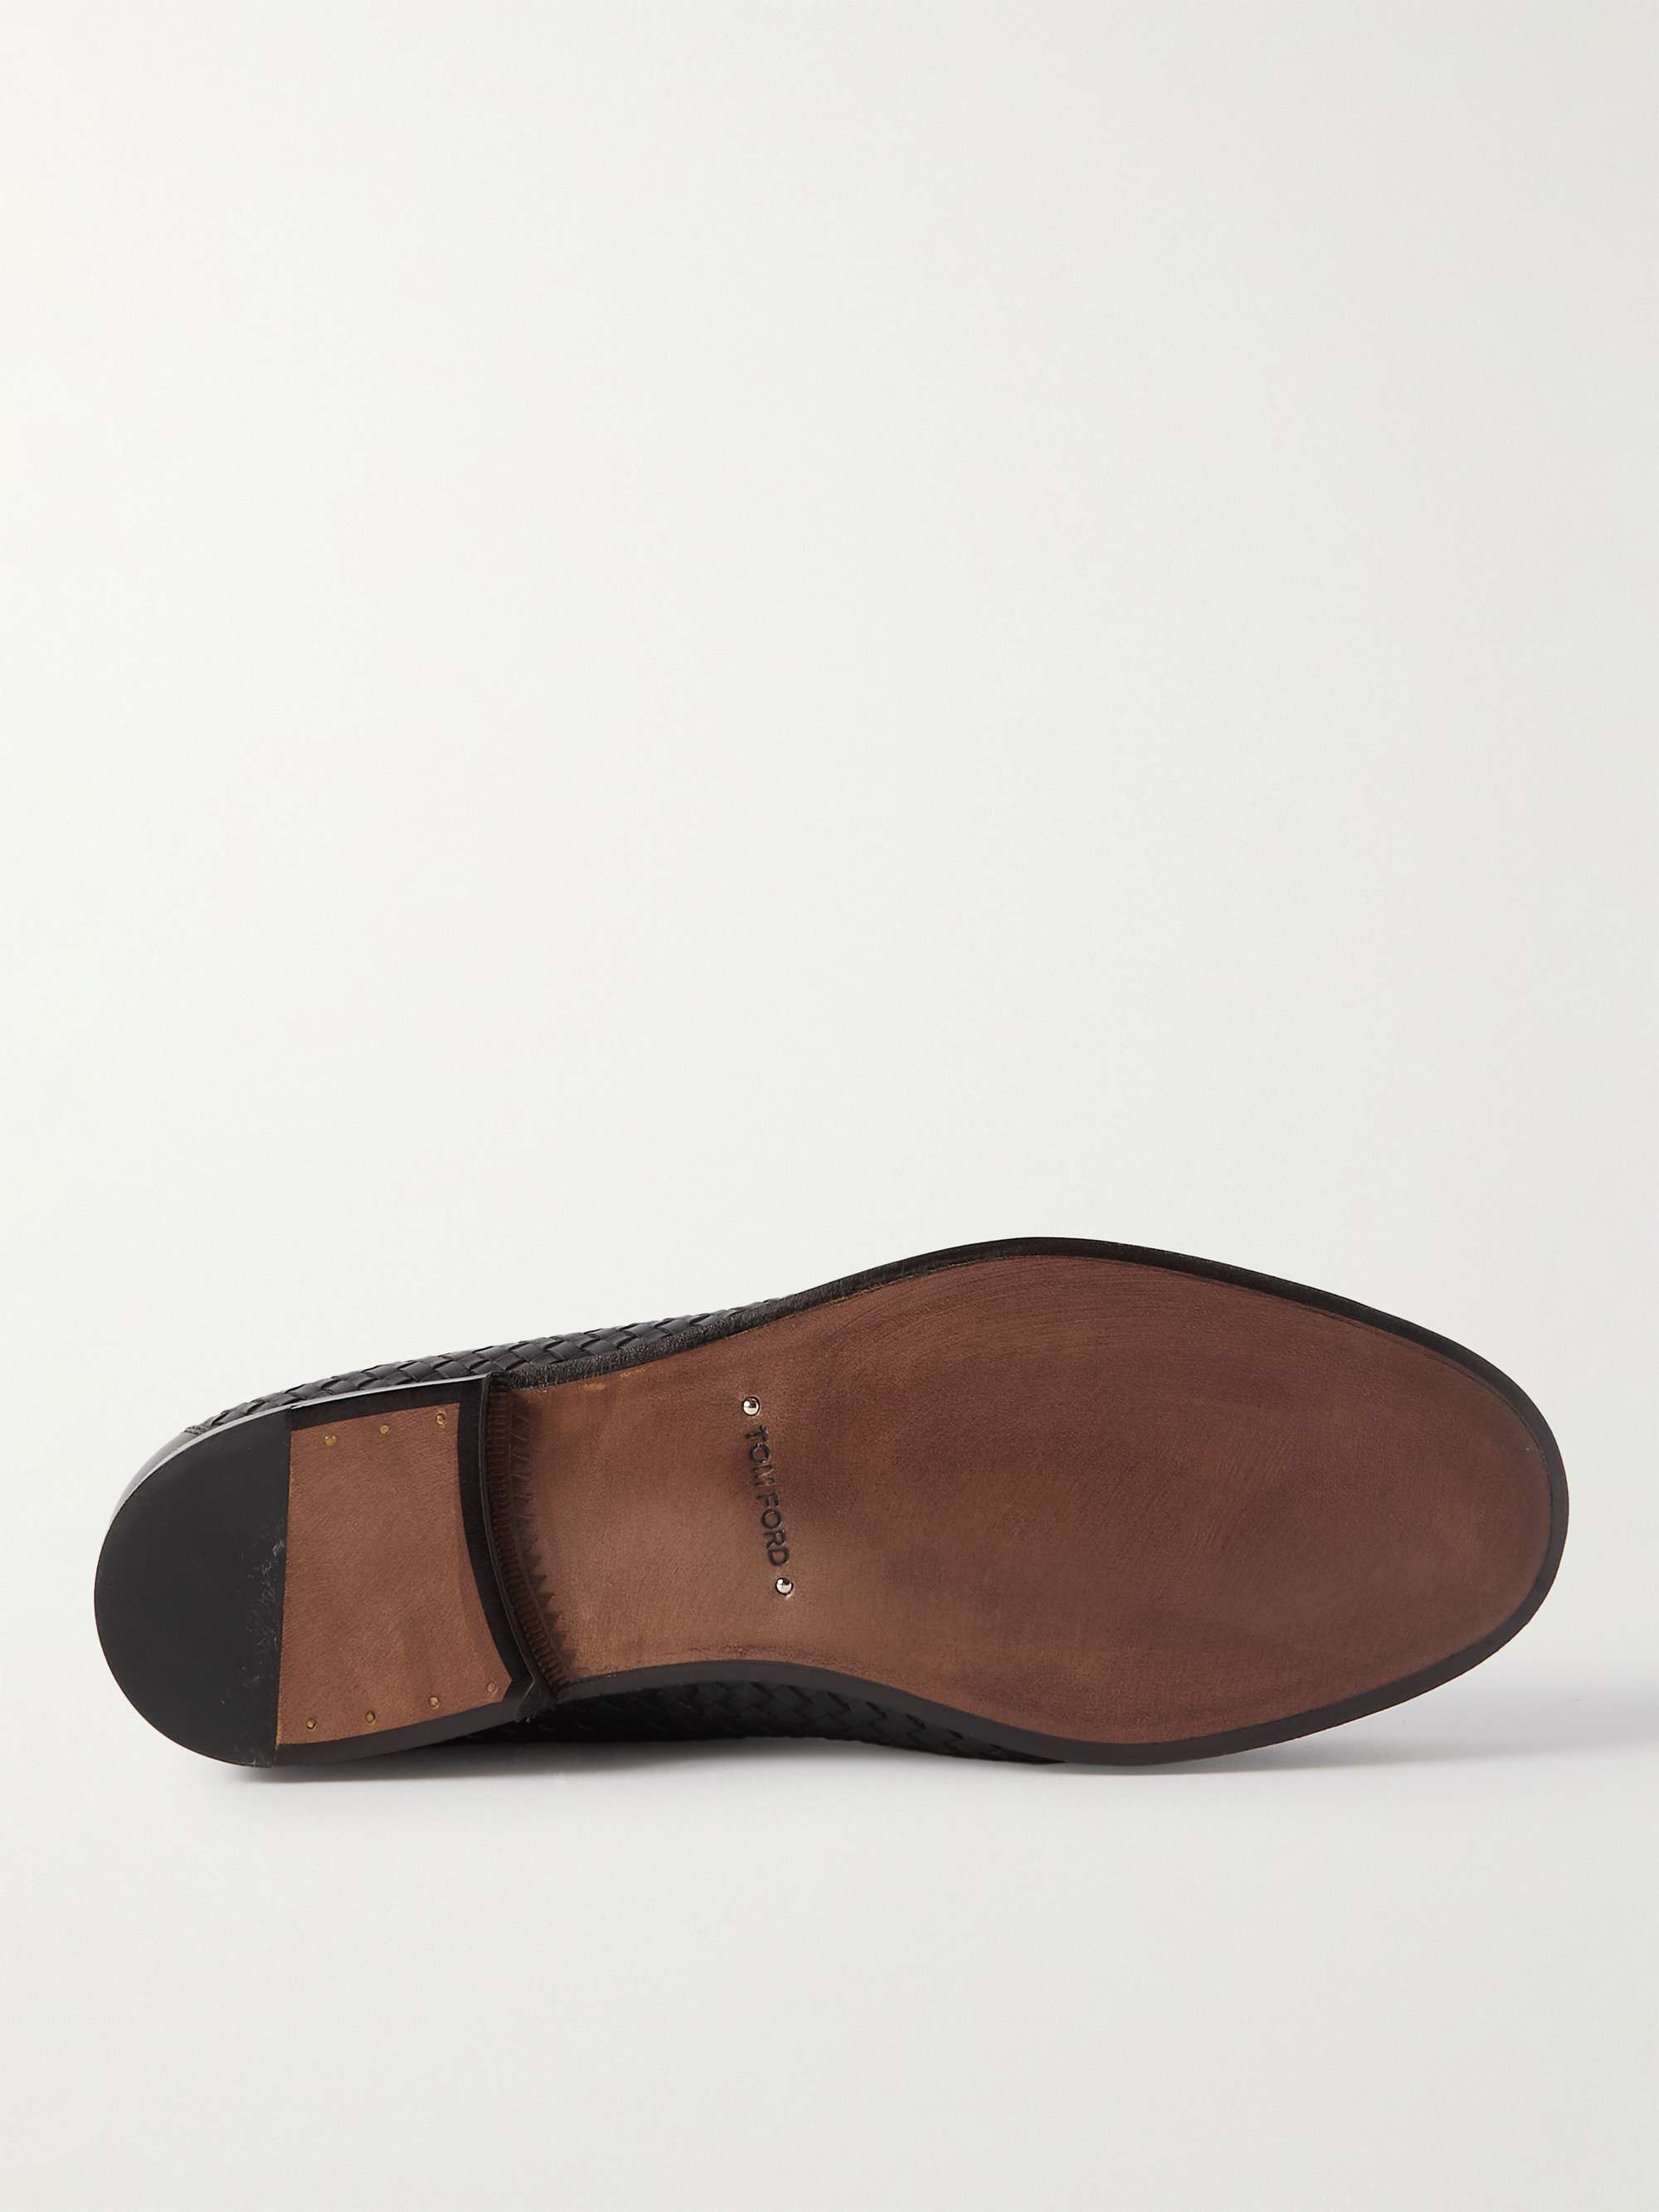 TOM FORD Neville Woven Leather Loafers for Men | MR PORTER